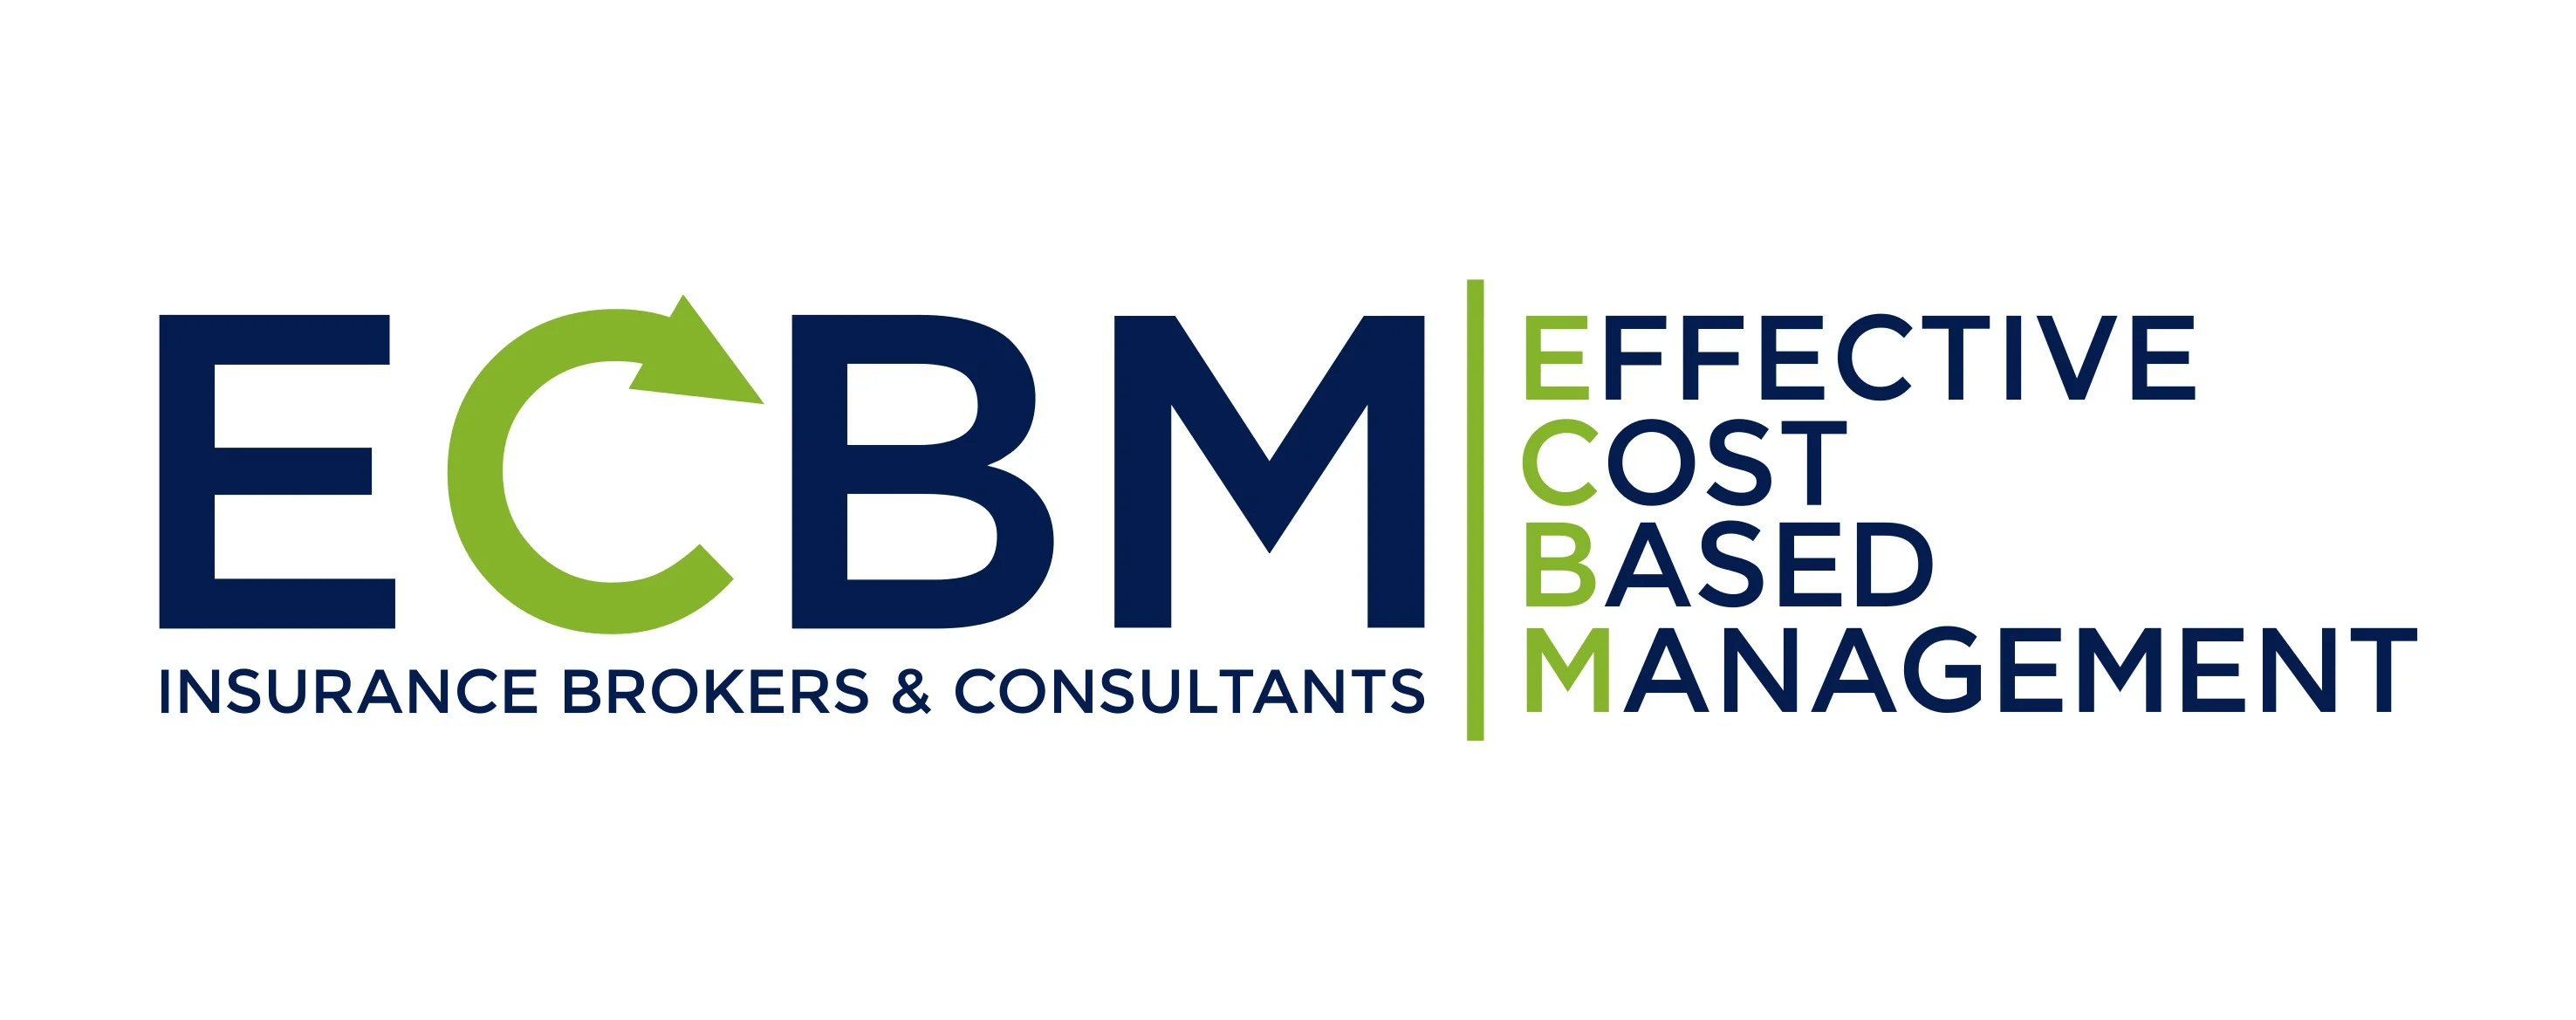 ECBM Insurance Brokers & Consultants logo